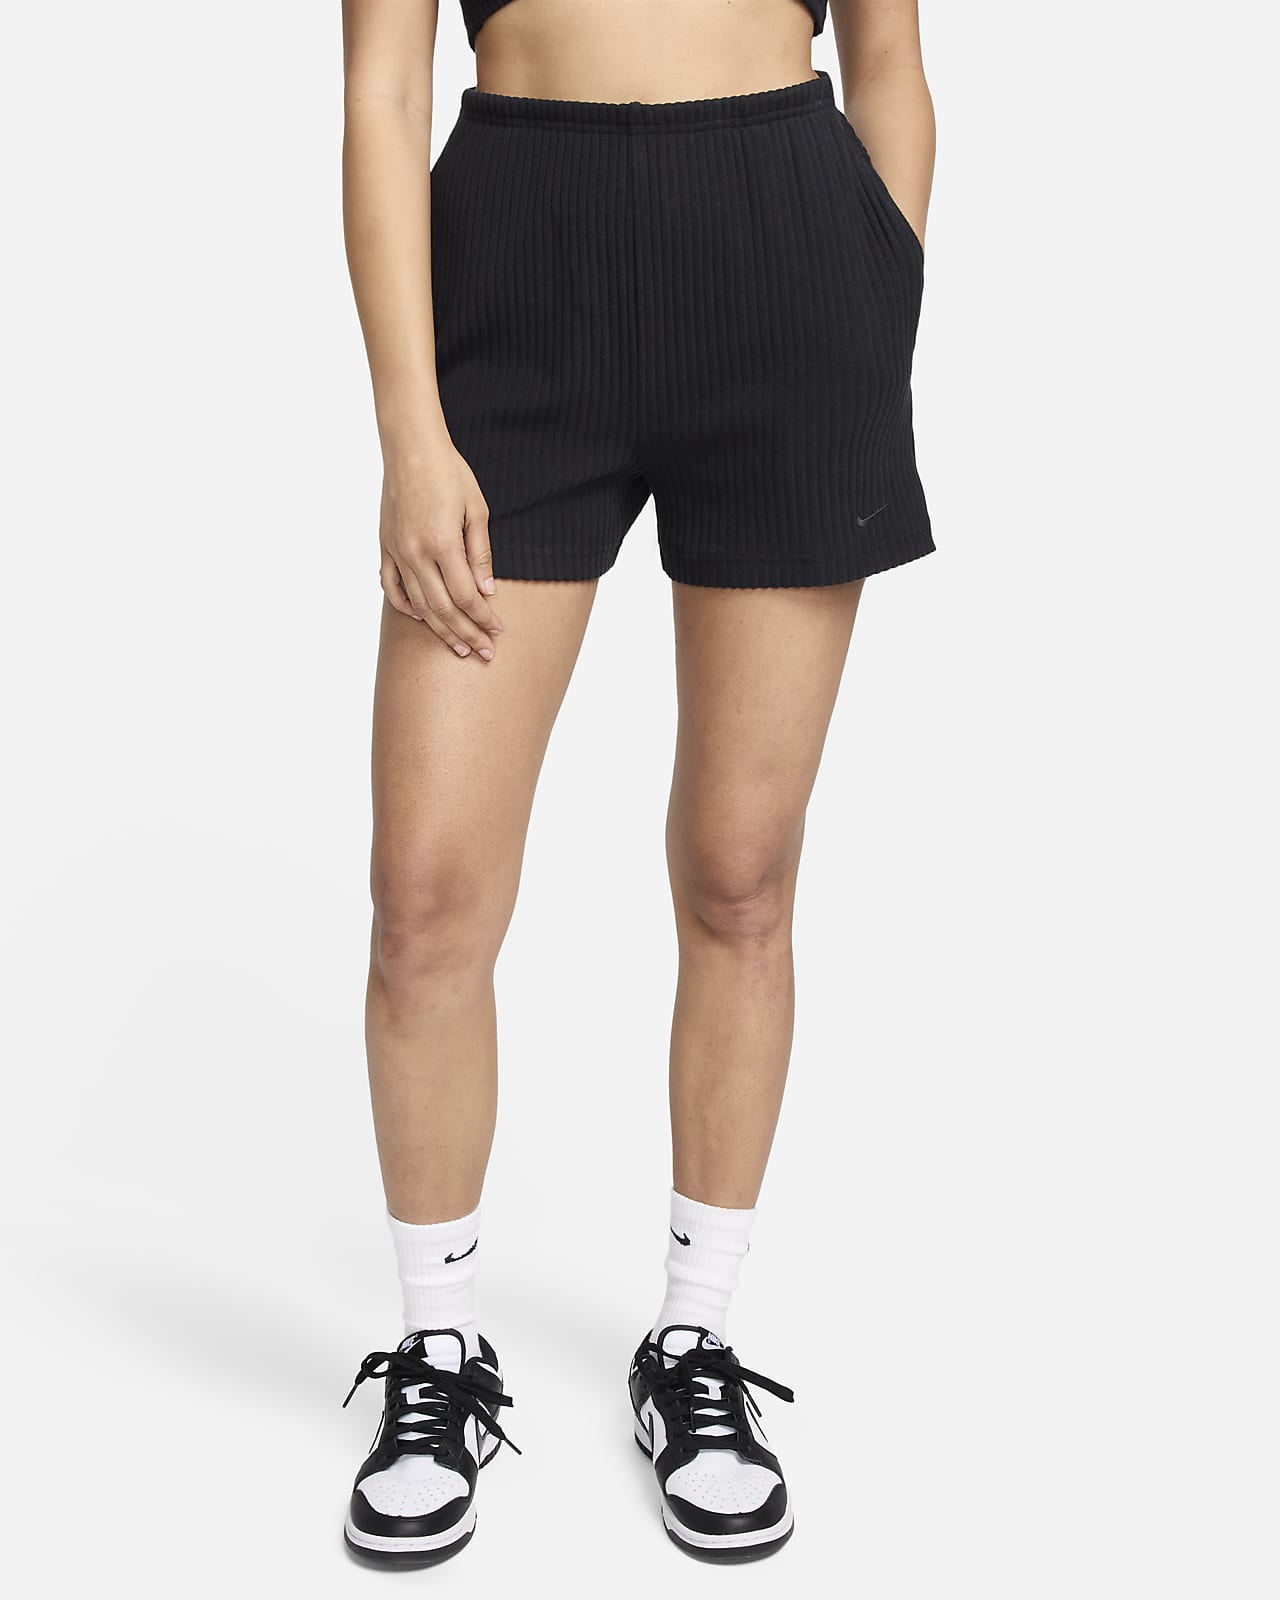 Nike Sportswear Chill Knit Pantalons curts entallats de canalé amb cintura alta de 8 cm - Dona